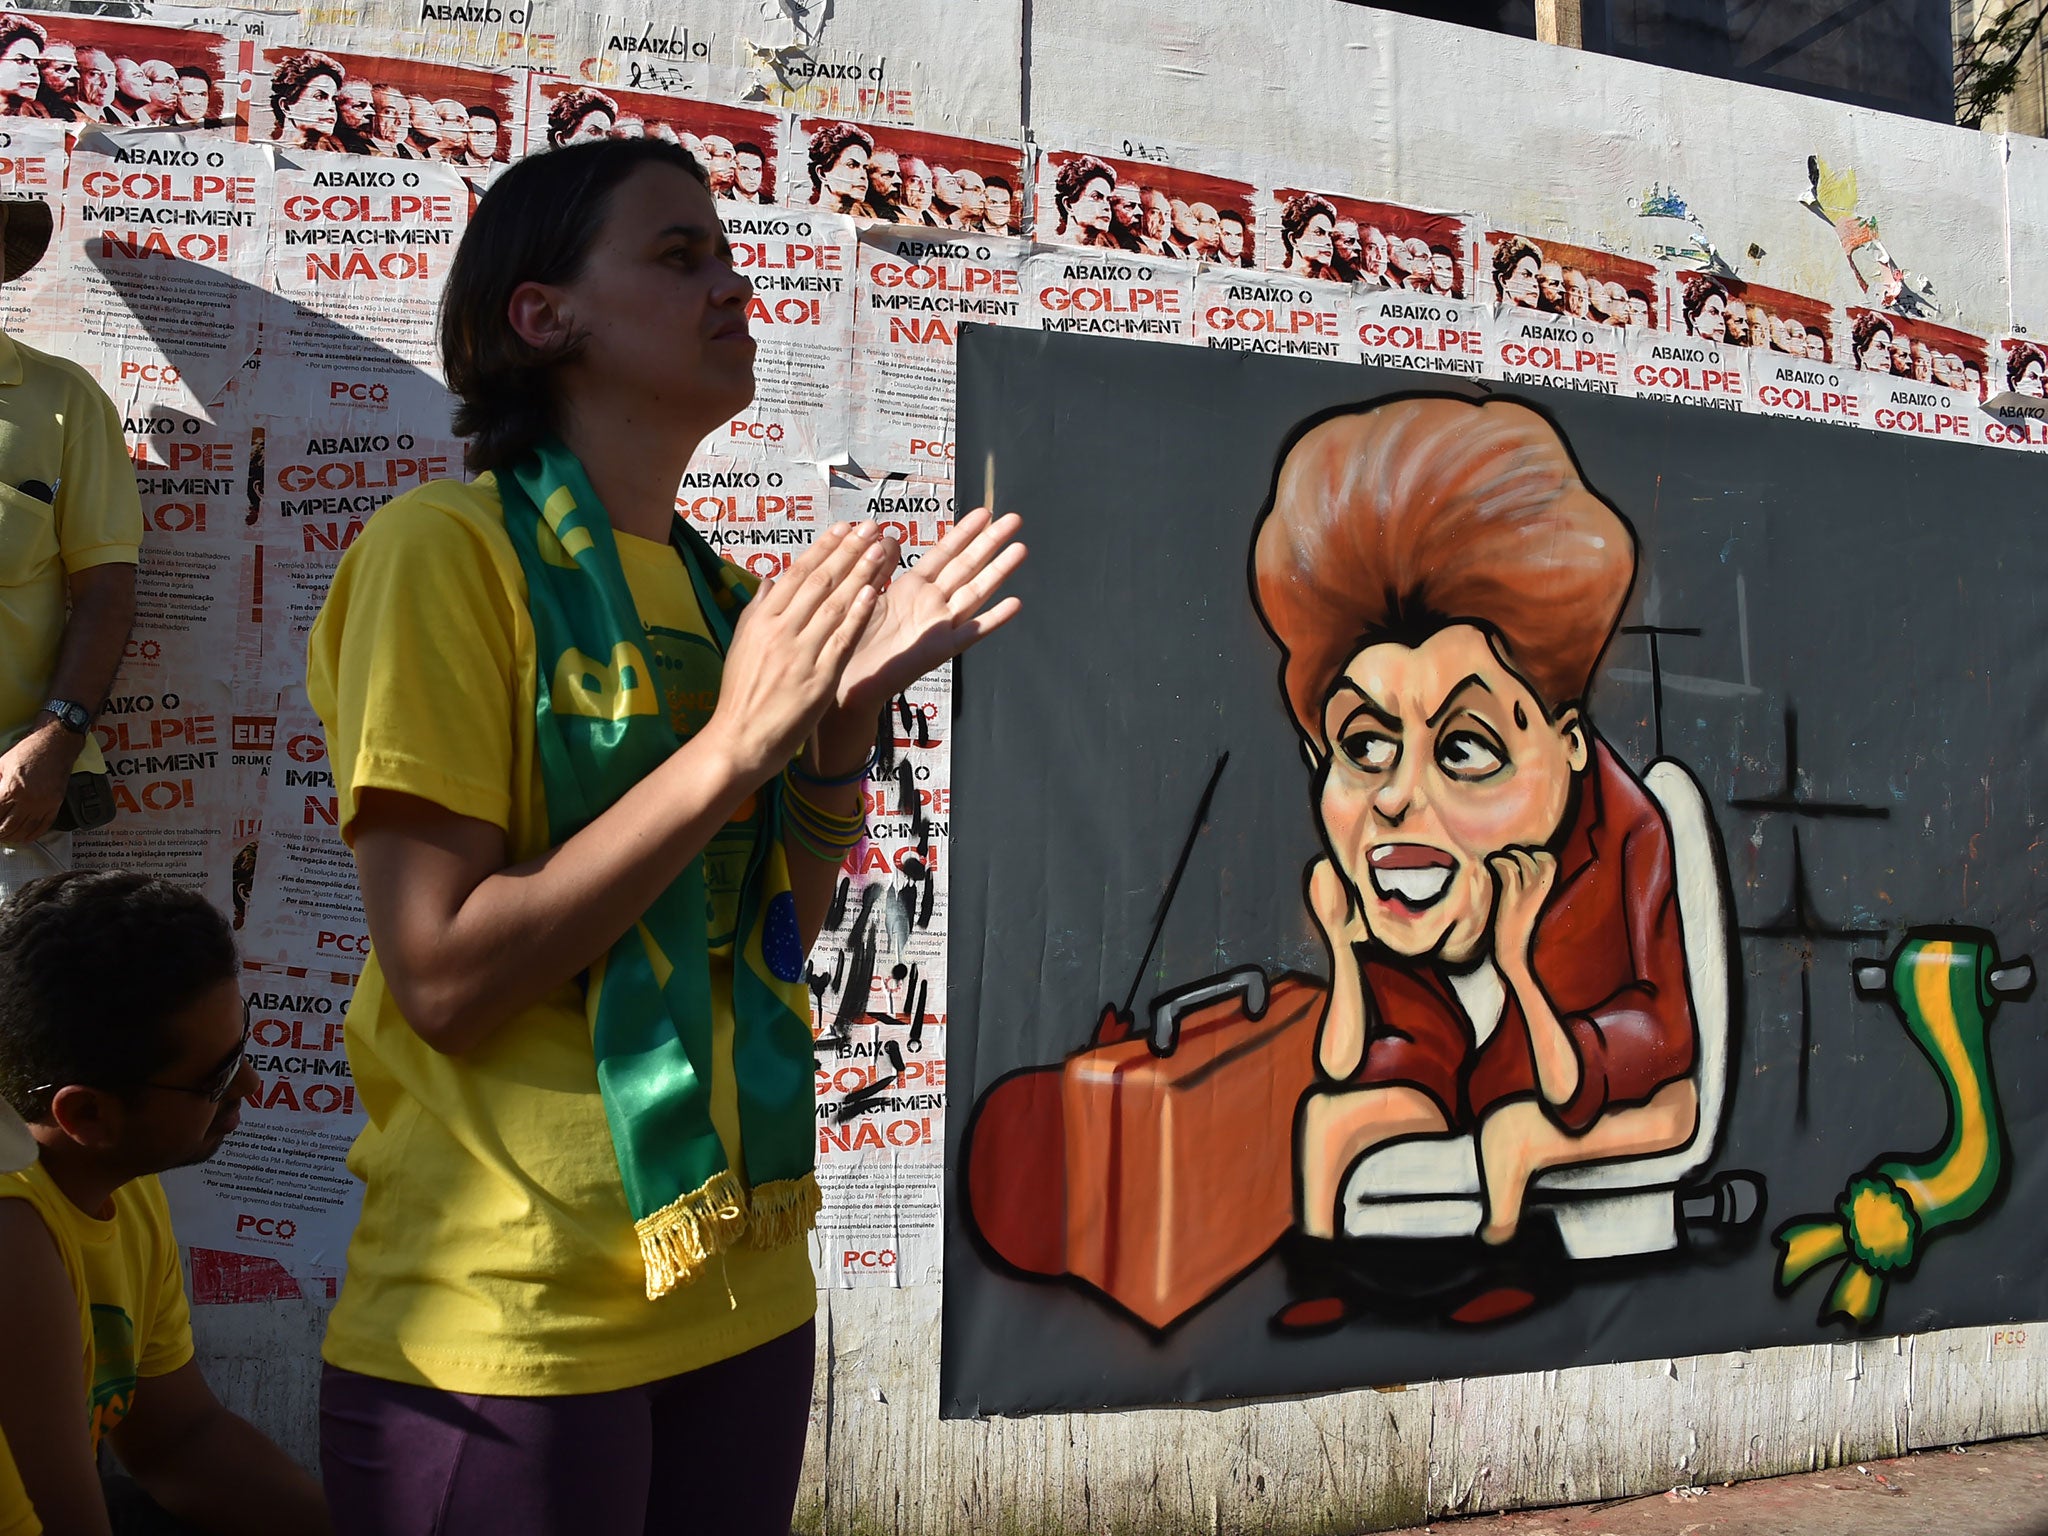 President Rousseff's plight has rapidly worsened